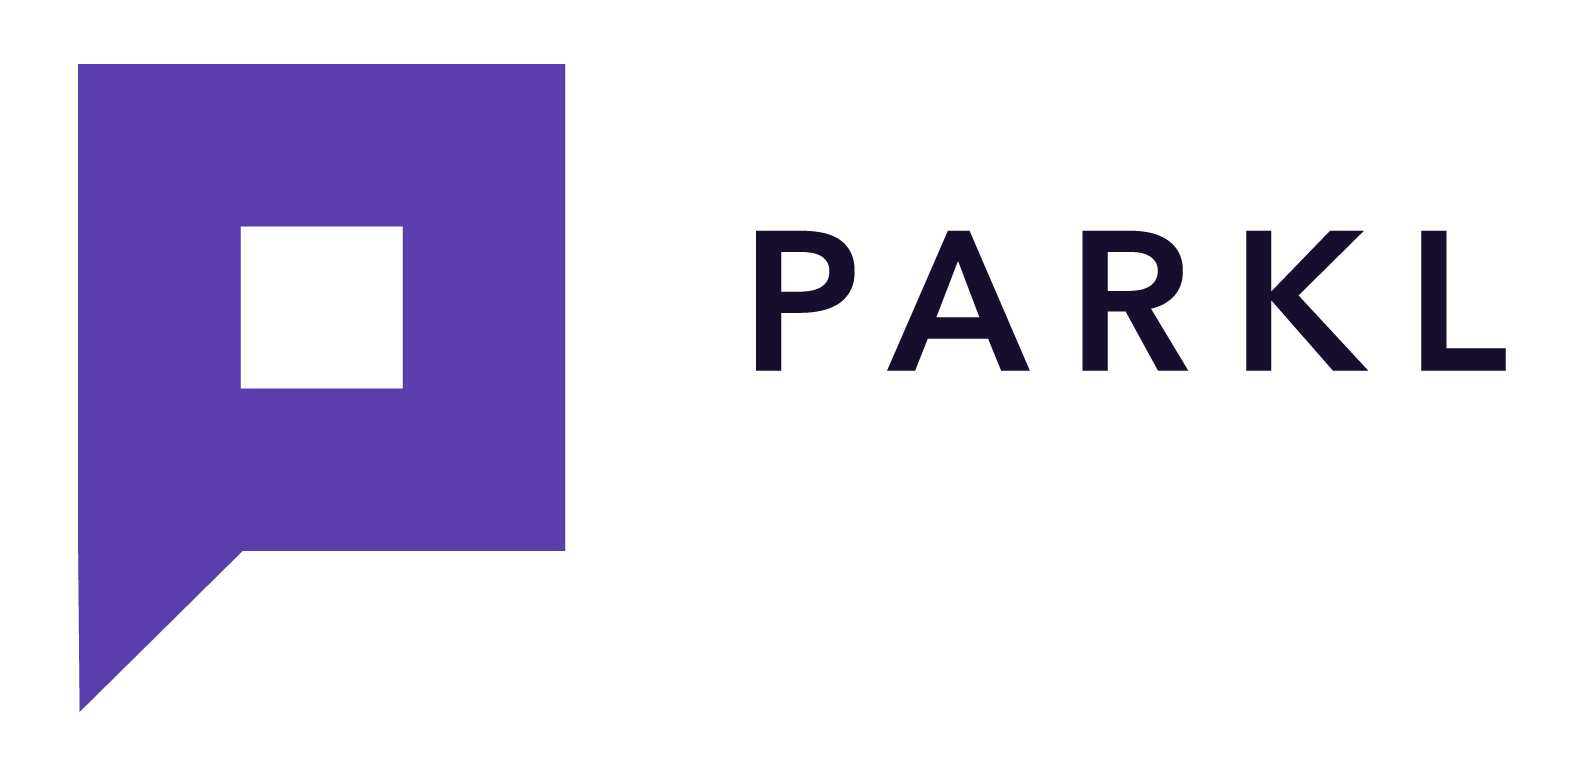 parkl logo